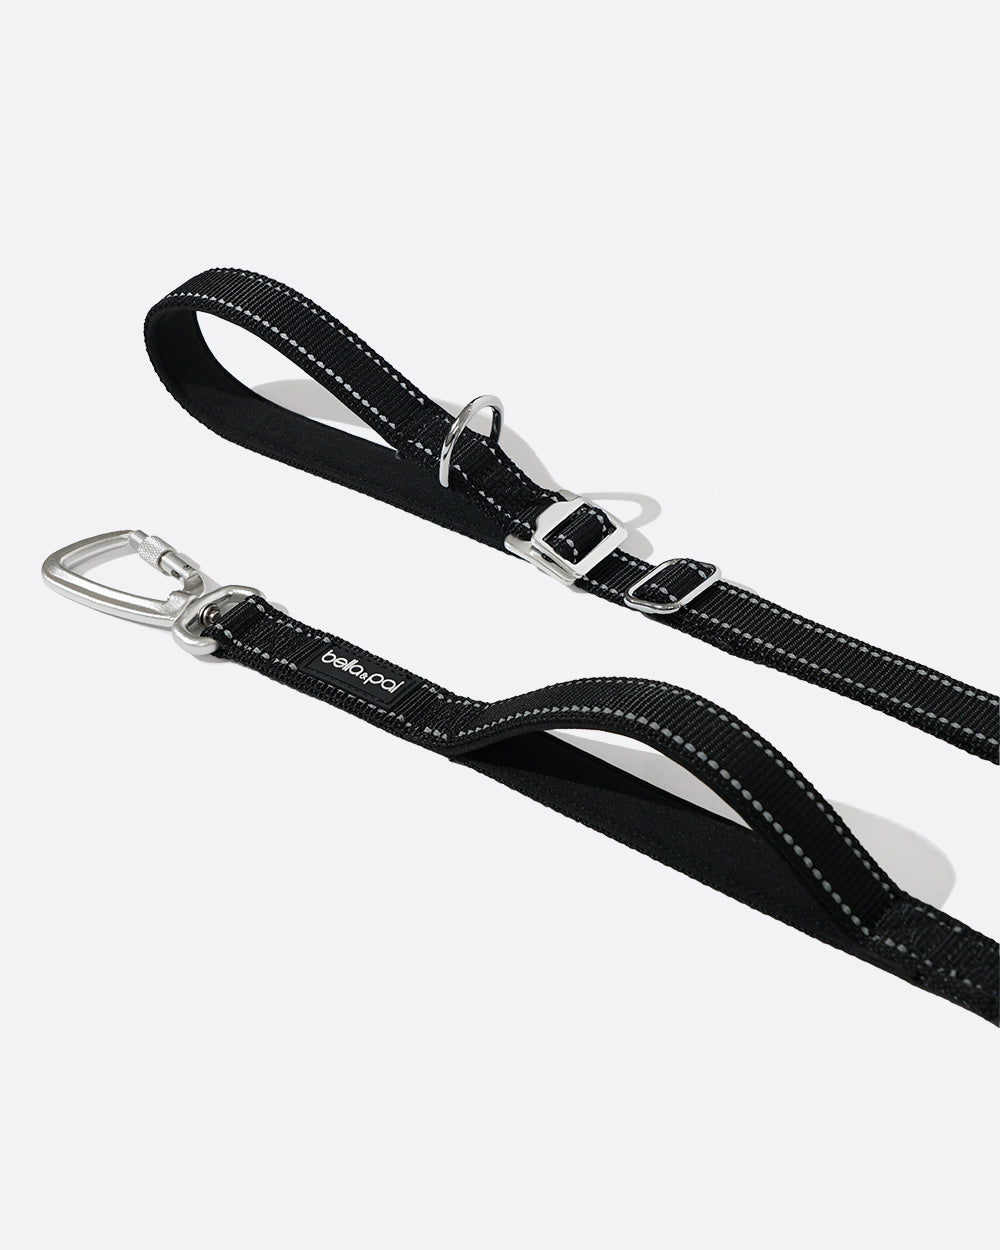 All-Metal Multifunctional Hands-Free Dog Leash - Classic Black